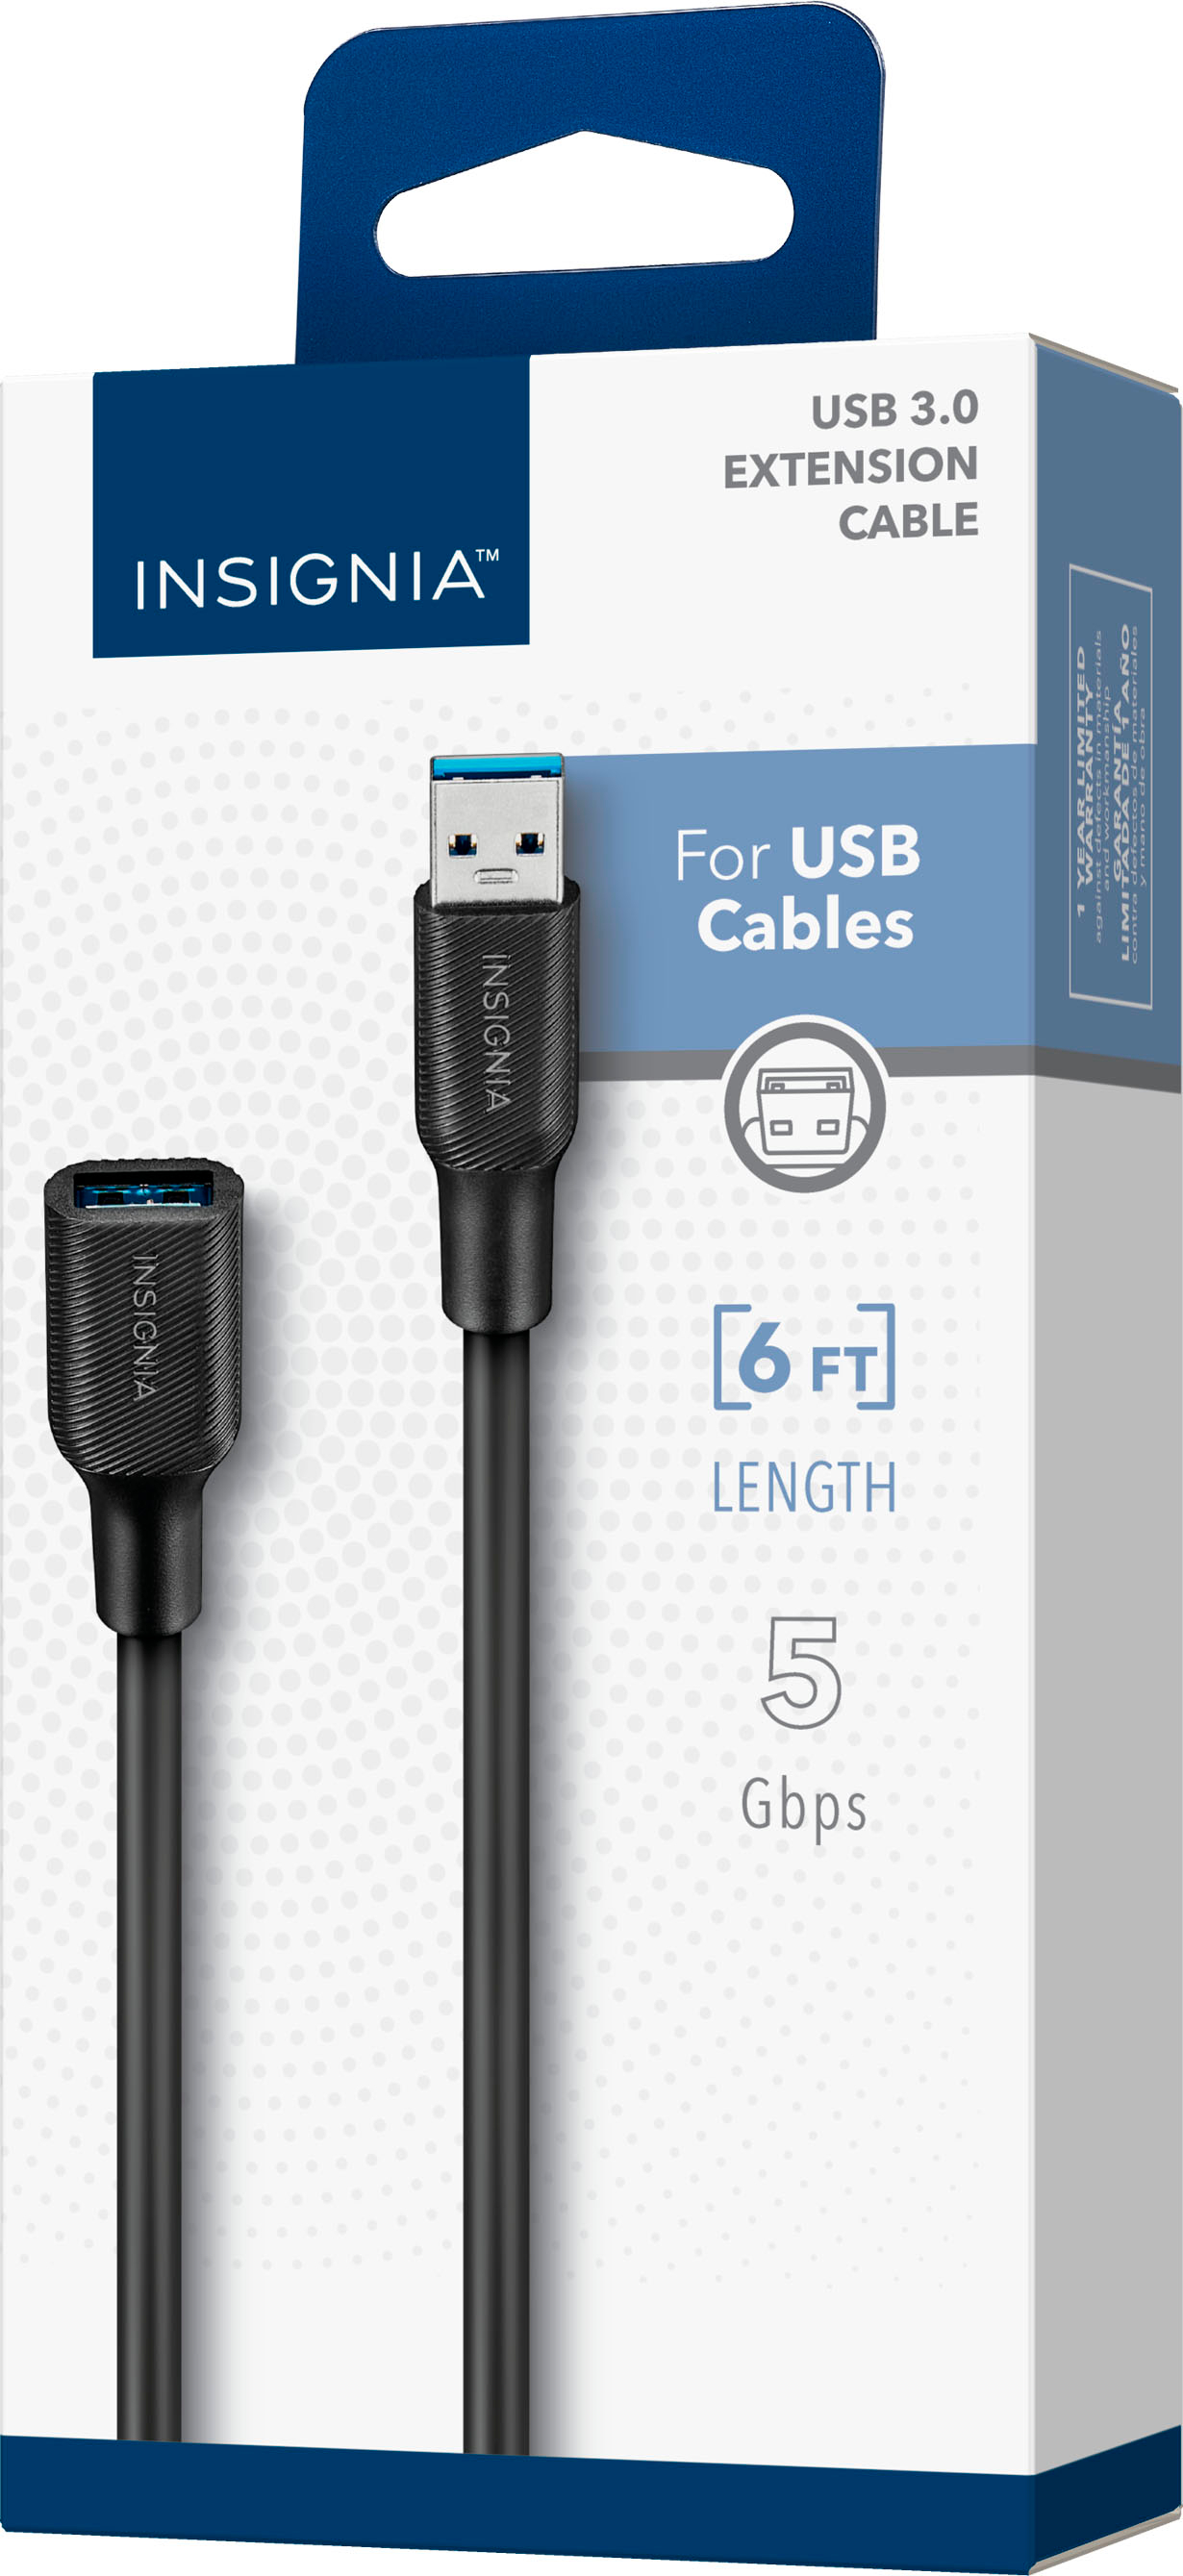 Micro USB 2.0 Cable, Black, Type A Male / Micro-B Male, 6 inch